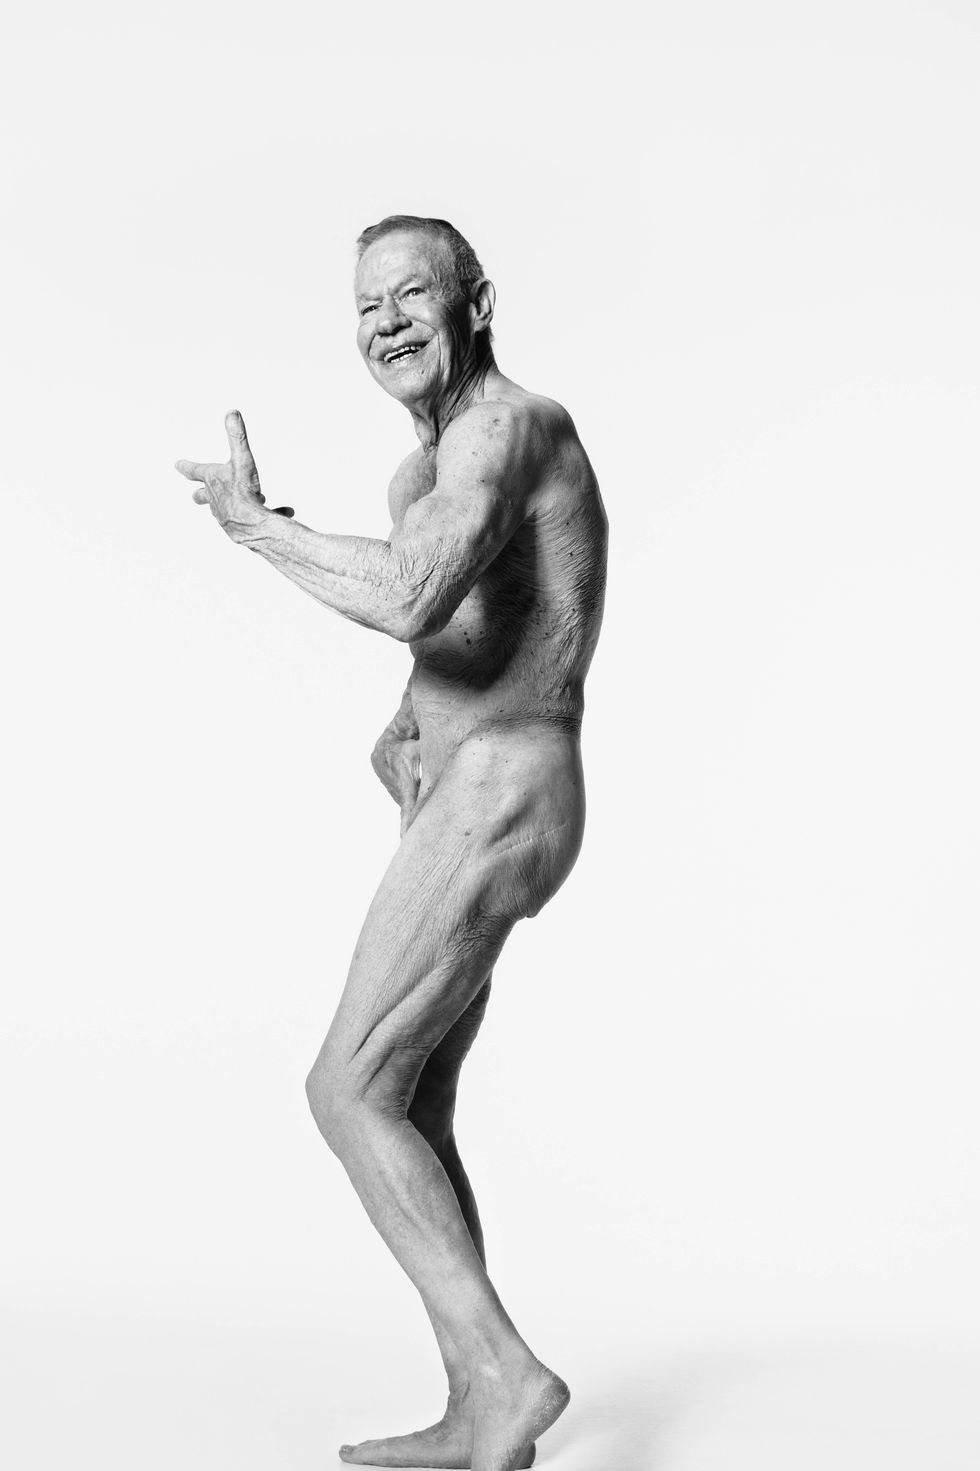 Jim Arrington, The World's Oldest BodyBuilder, Shares His Strength Secrets